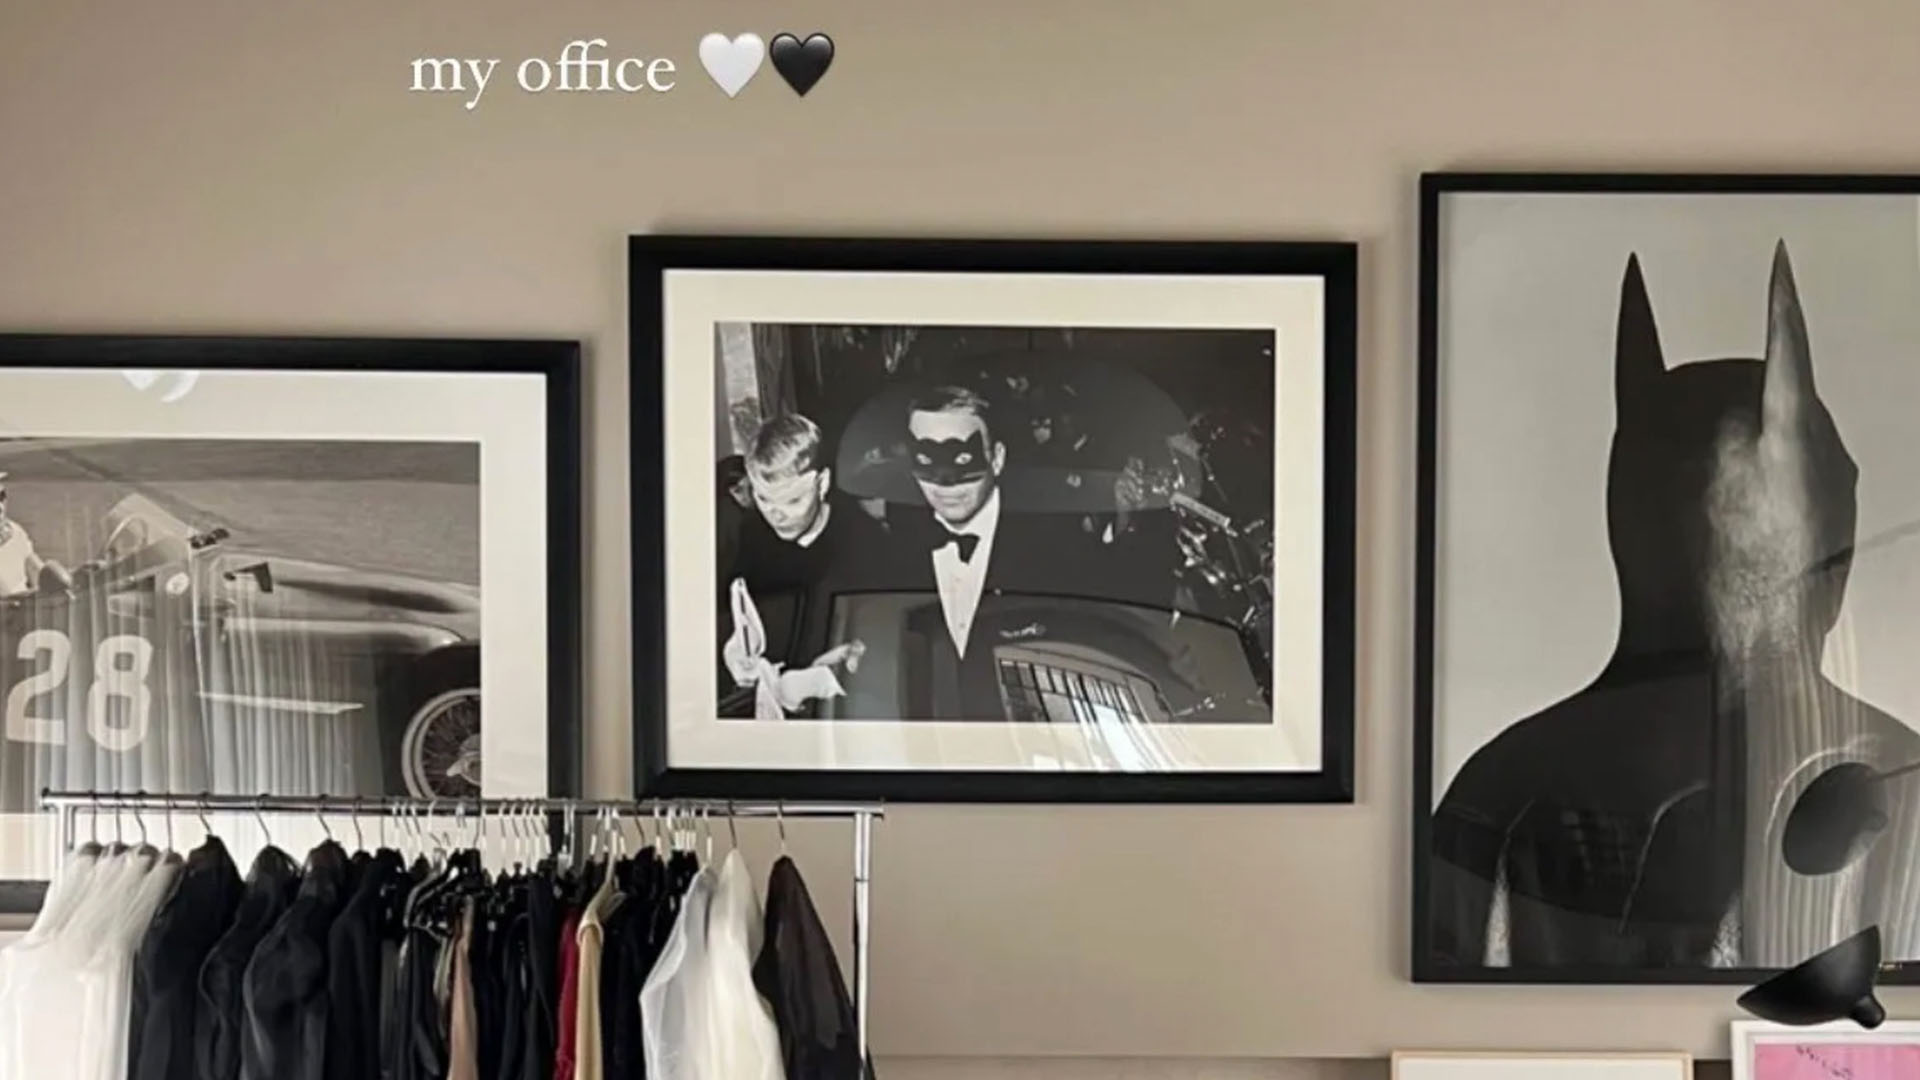 Kourtney Kim Kardashian shares rare photos and racks of designer clothes from her $9M mansion.